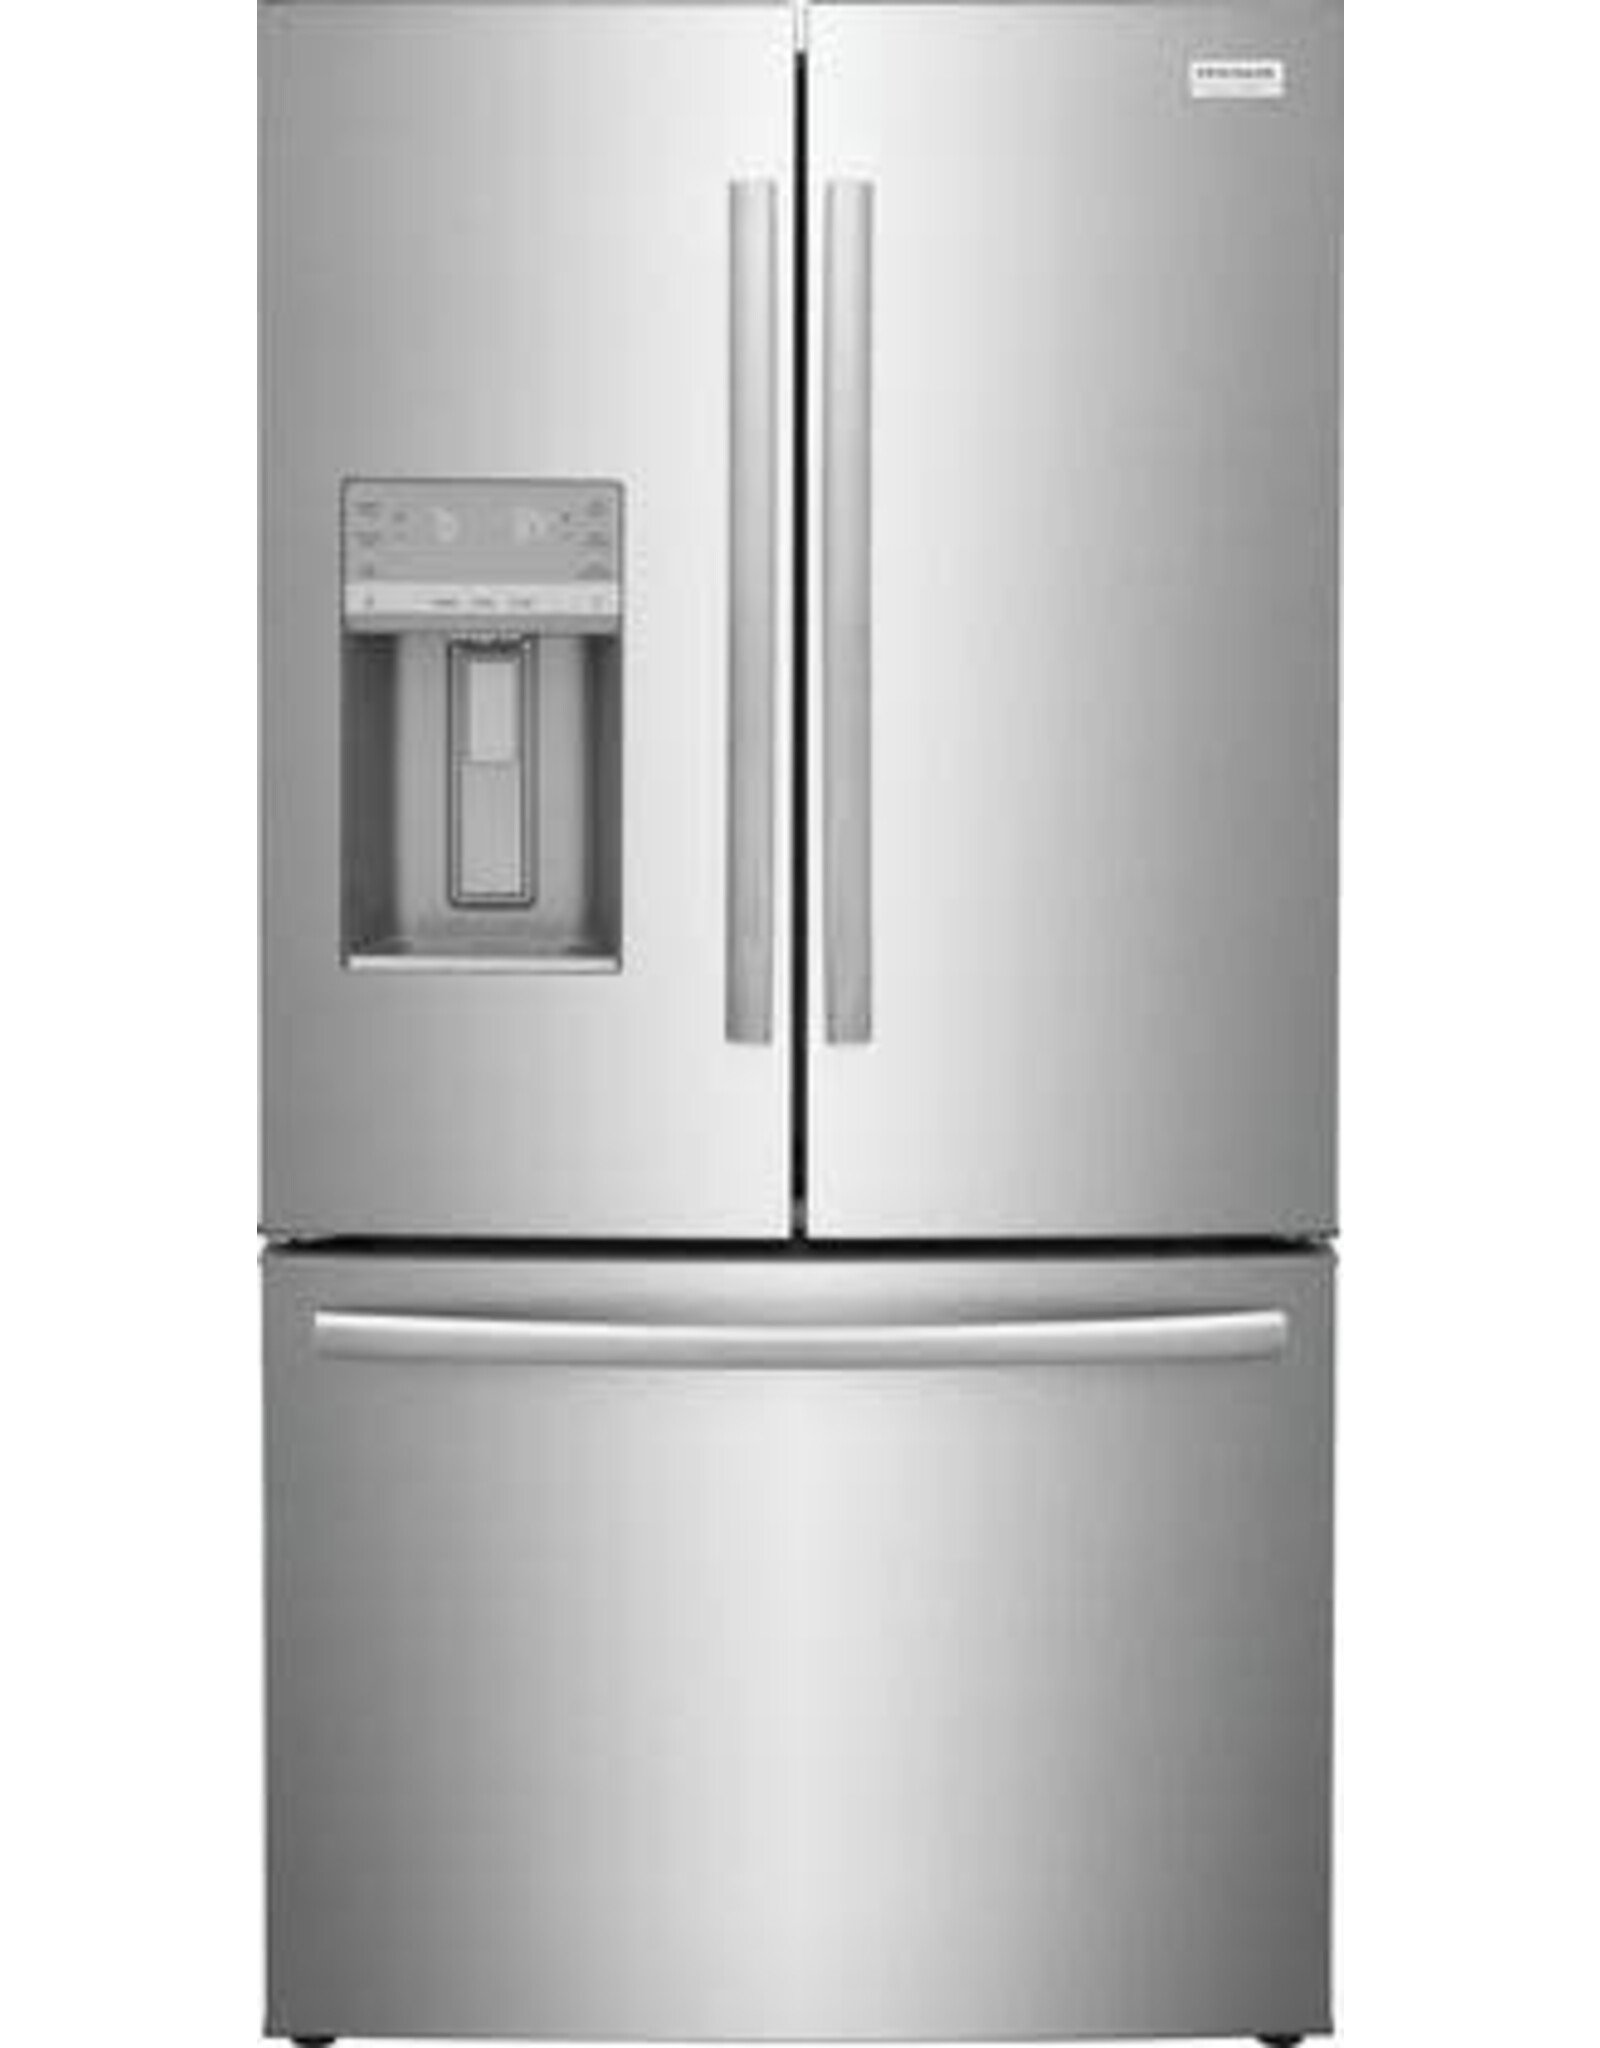 GRFS2853AF 27.8 cu. ft. French Door Refrigerator in Smudge-Proof Stainless Steel